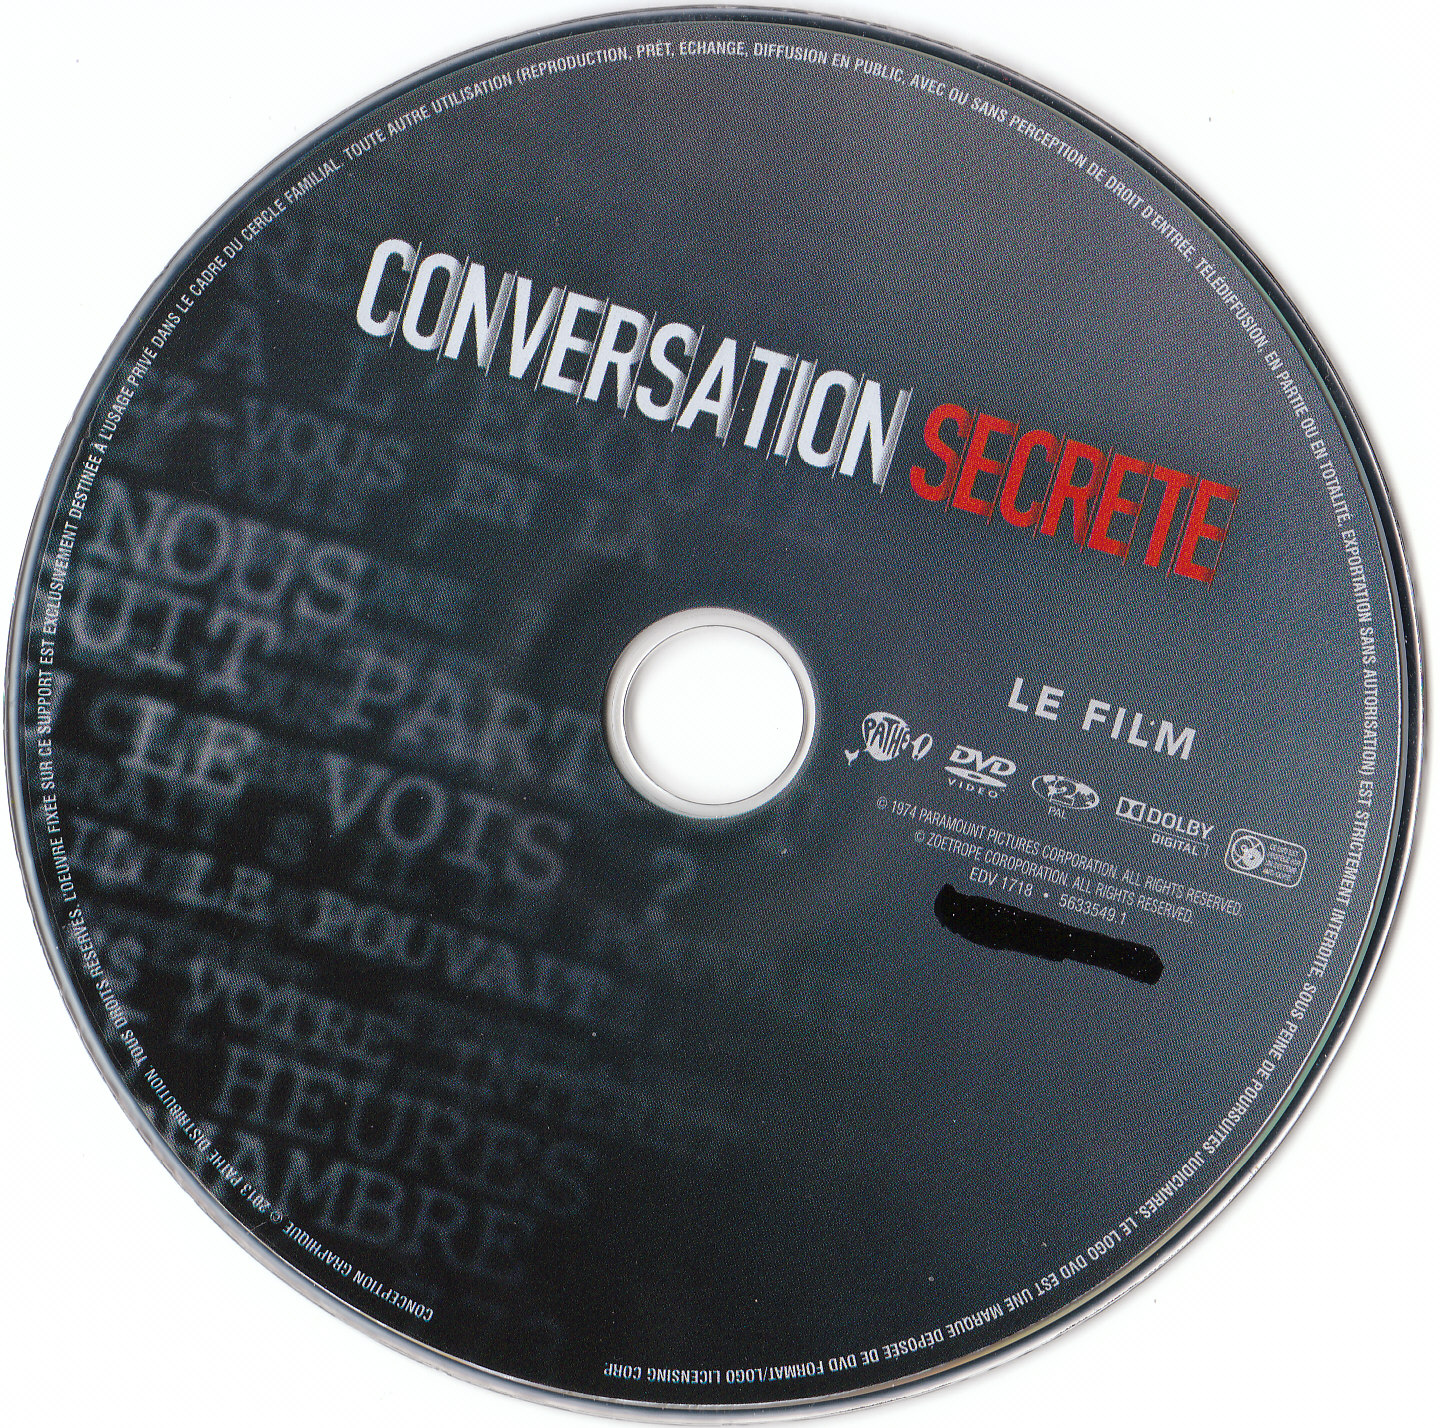 Conversation secrte